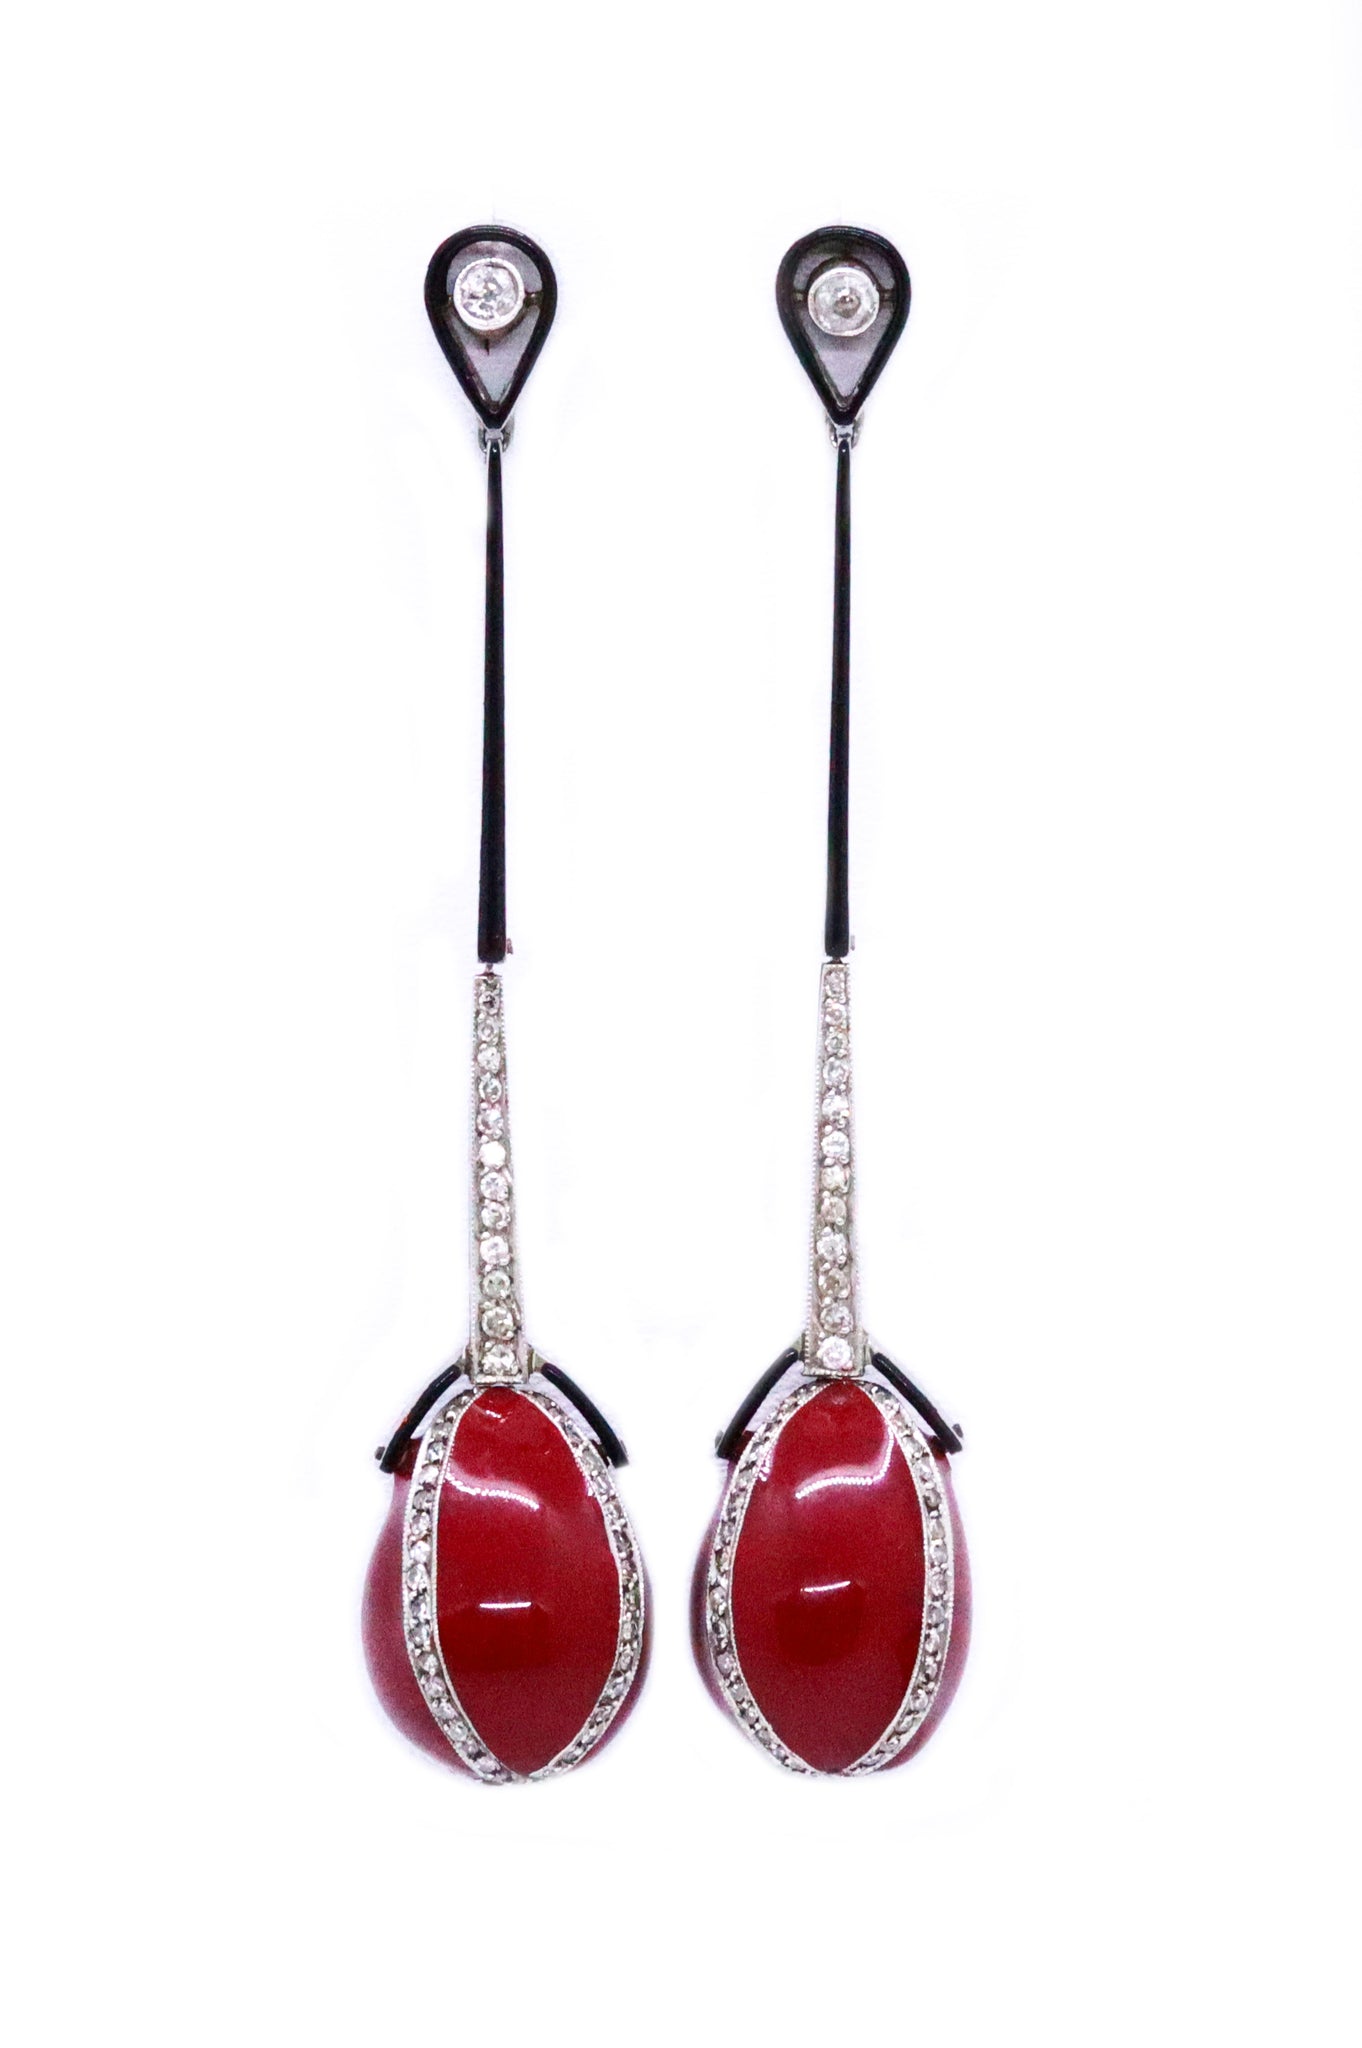 ART DECO PLATINUM EARRINGS, RED & BLACK ENAMEL WITH DIAMONDS